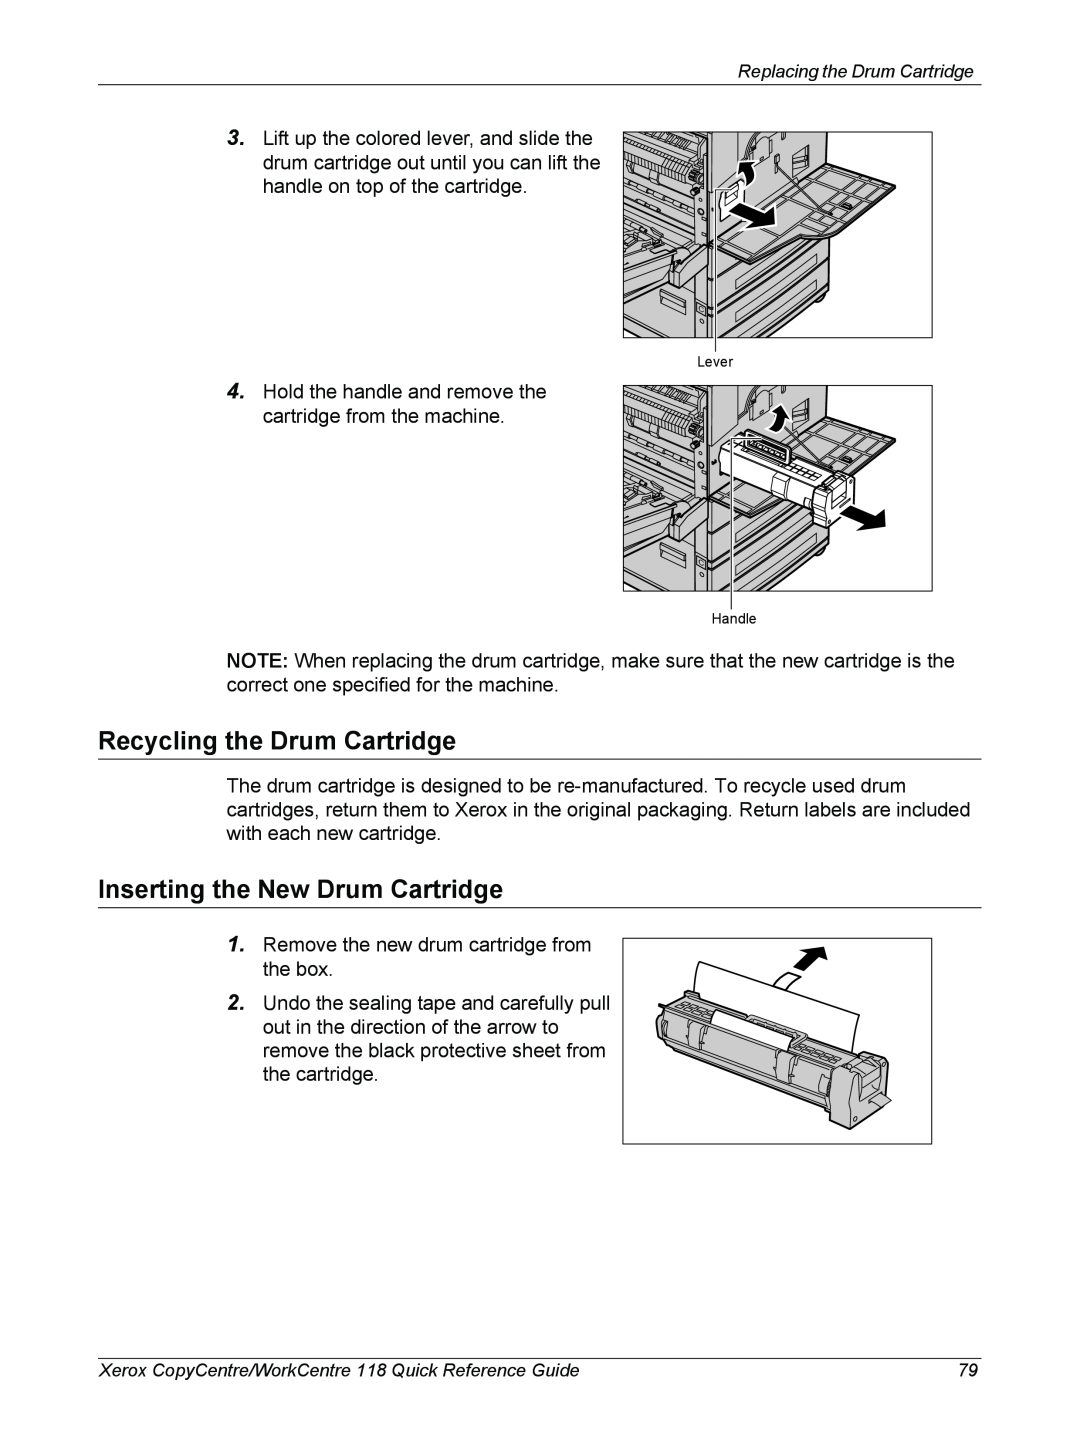 Xerox M118i, C118 manual Recycling the Drum Cartridge, Inserting the New Drum Cartridge 